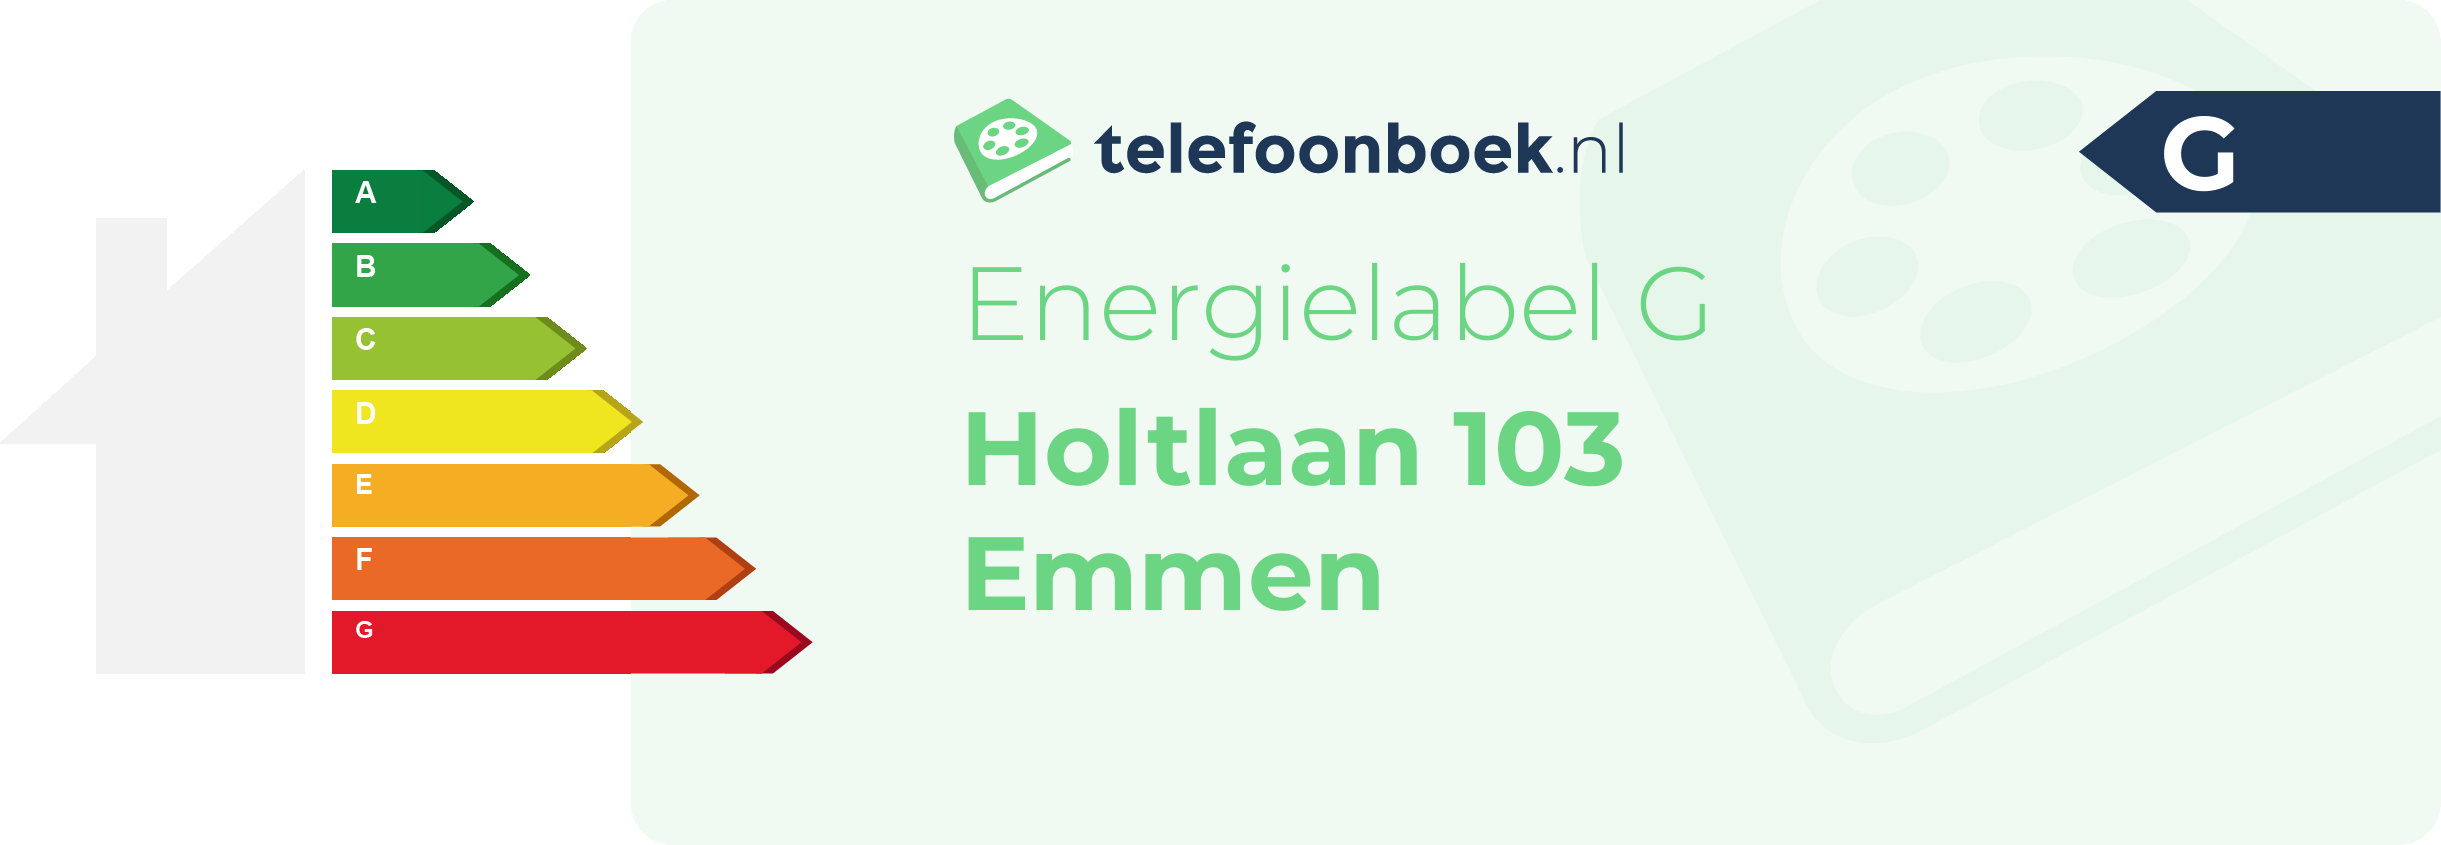 Energielabel Holtlaan 103 Emmen